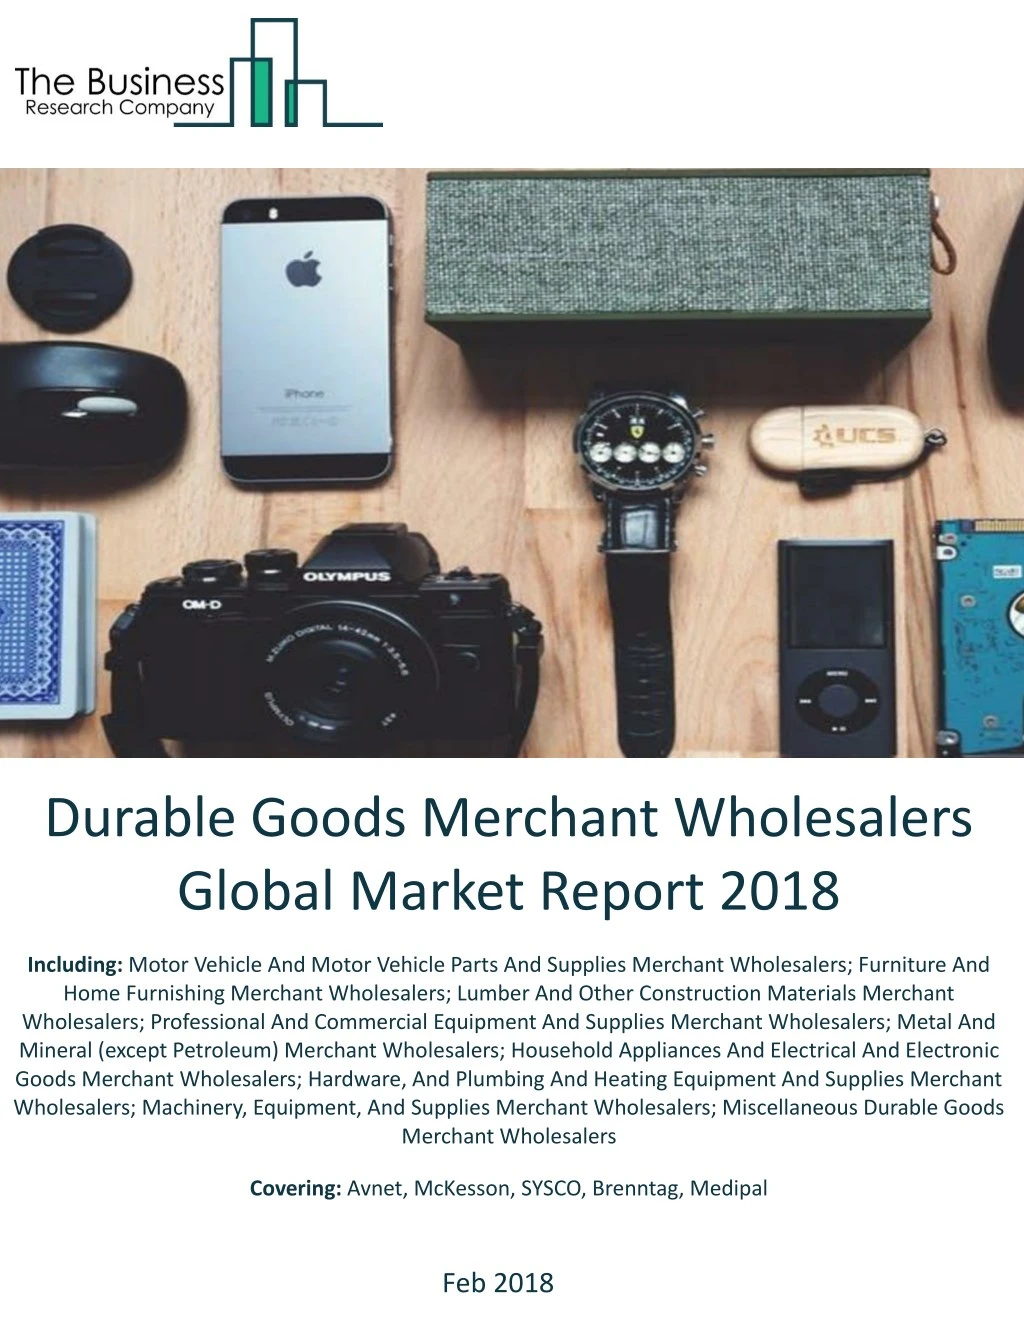 durable goods merchant wholesalers global market